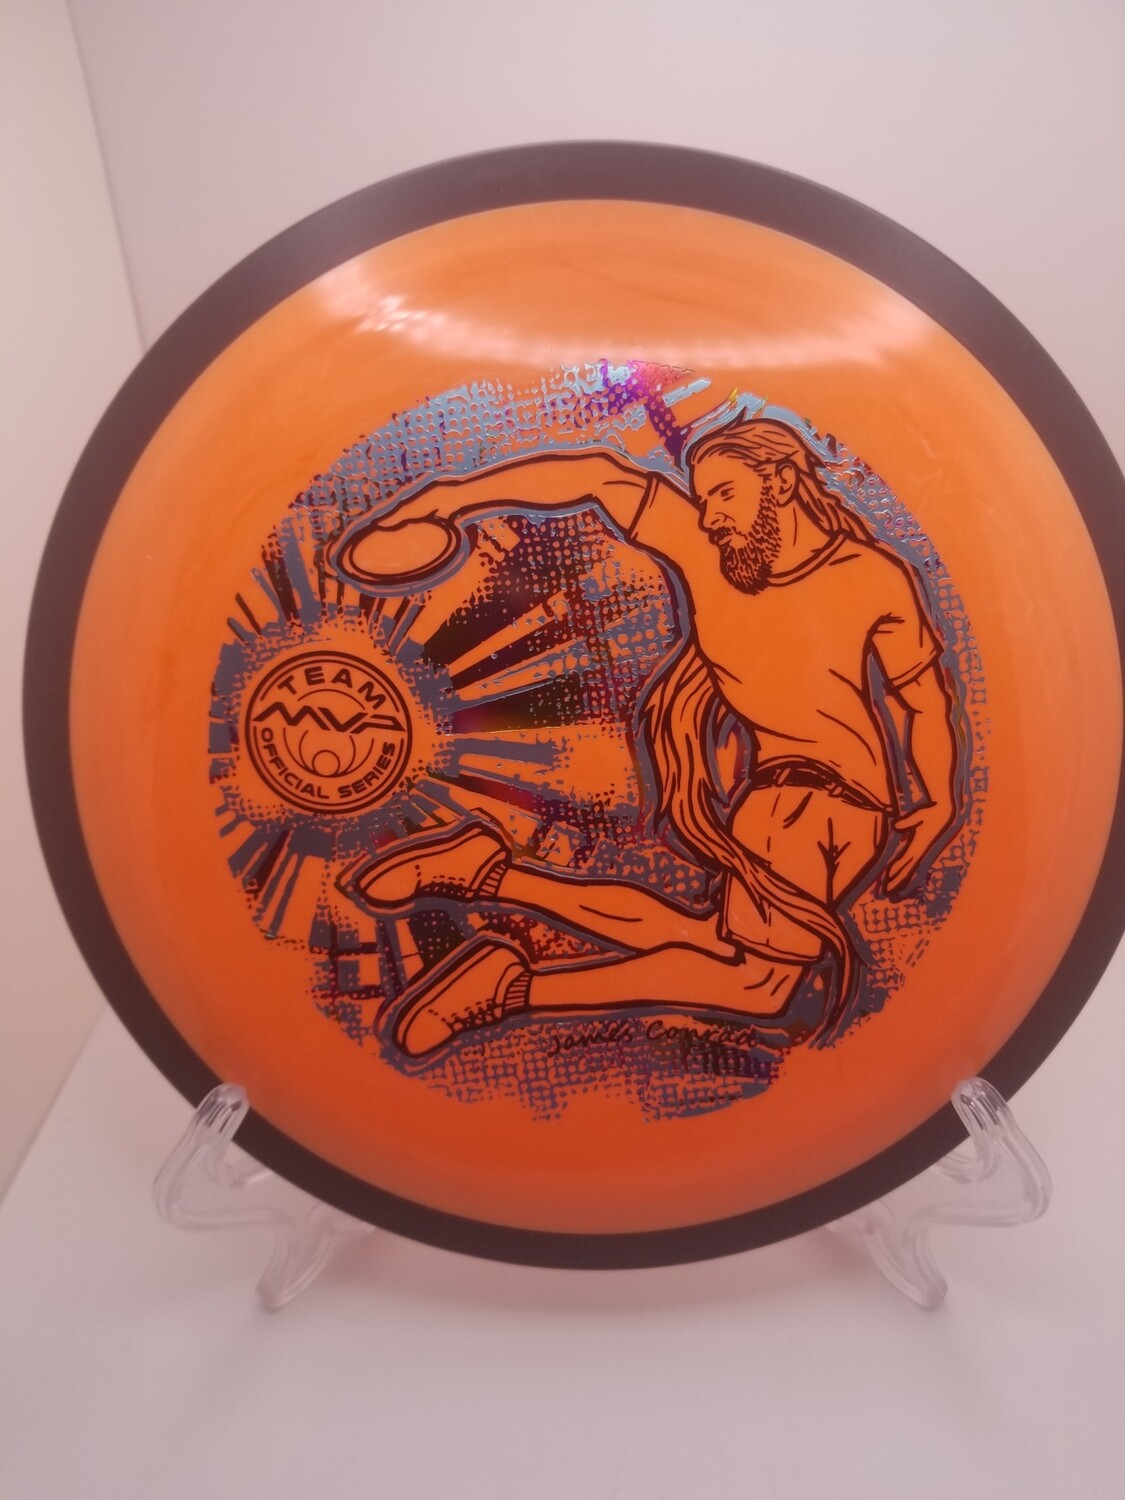 Twisty James Team Series Orange Disc MVP Discs Neutron Zenith 172g